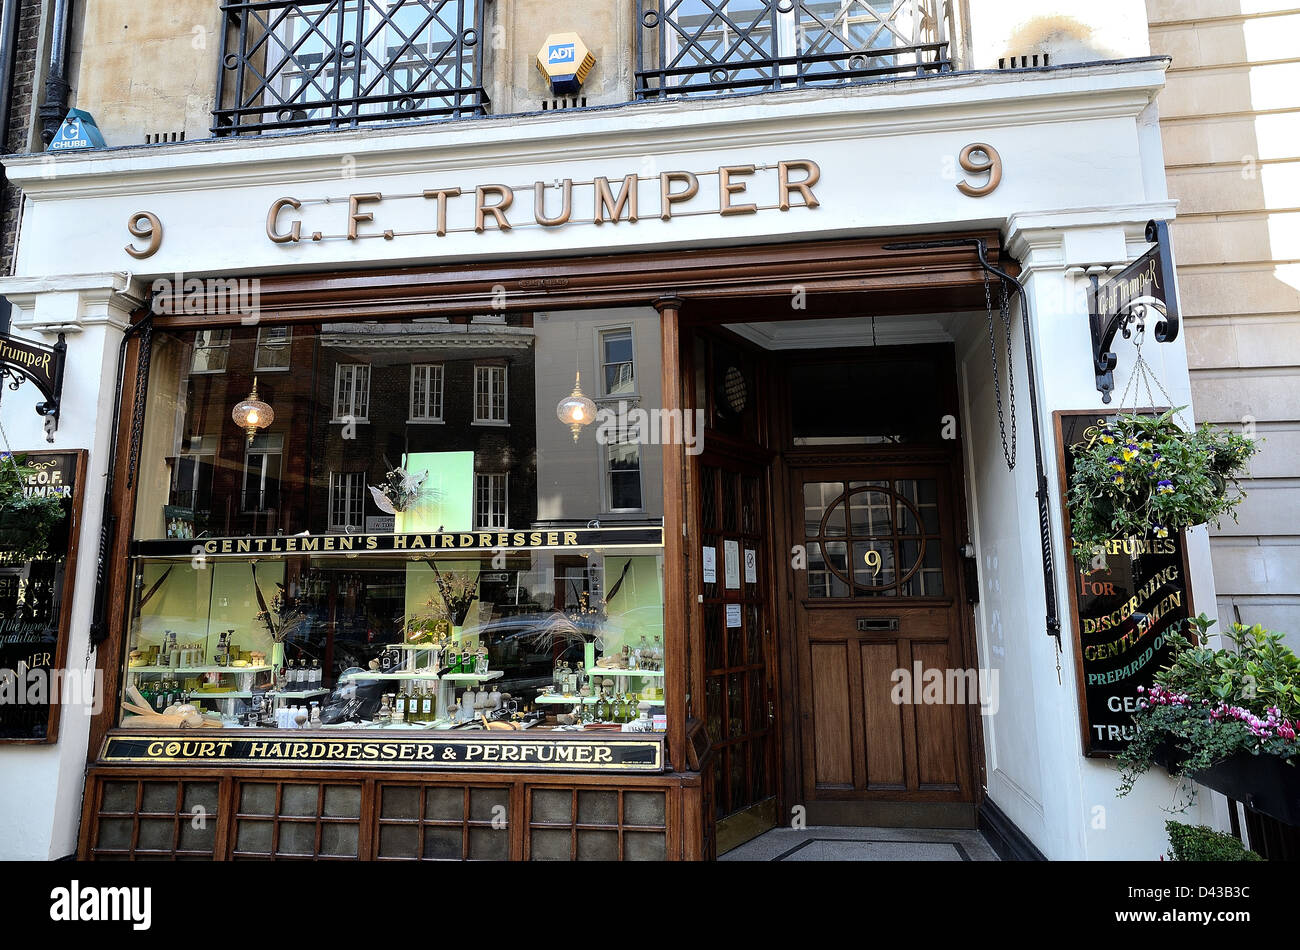 Facade of G.F.Trumper barber shop in Mayfair London Stock Photo